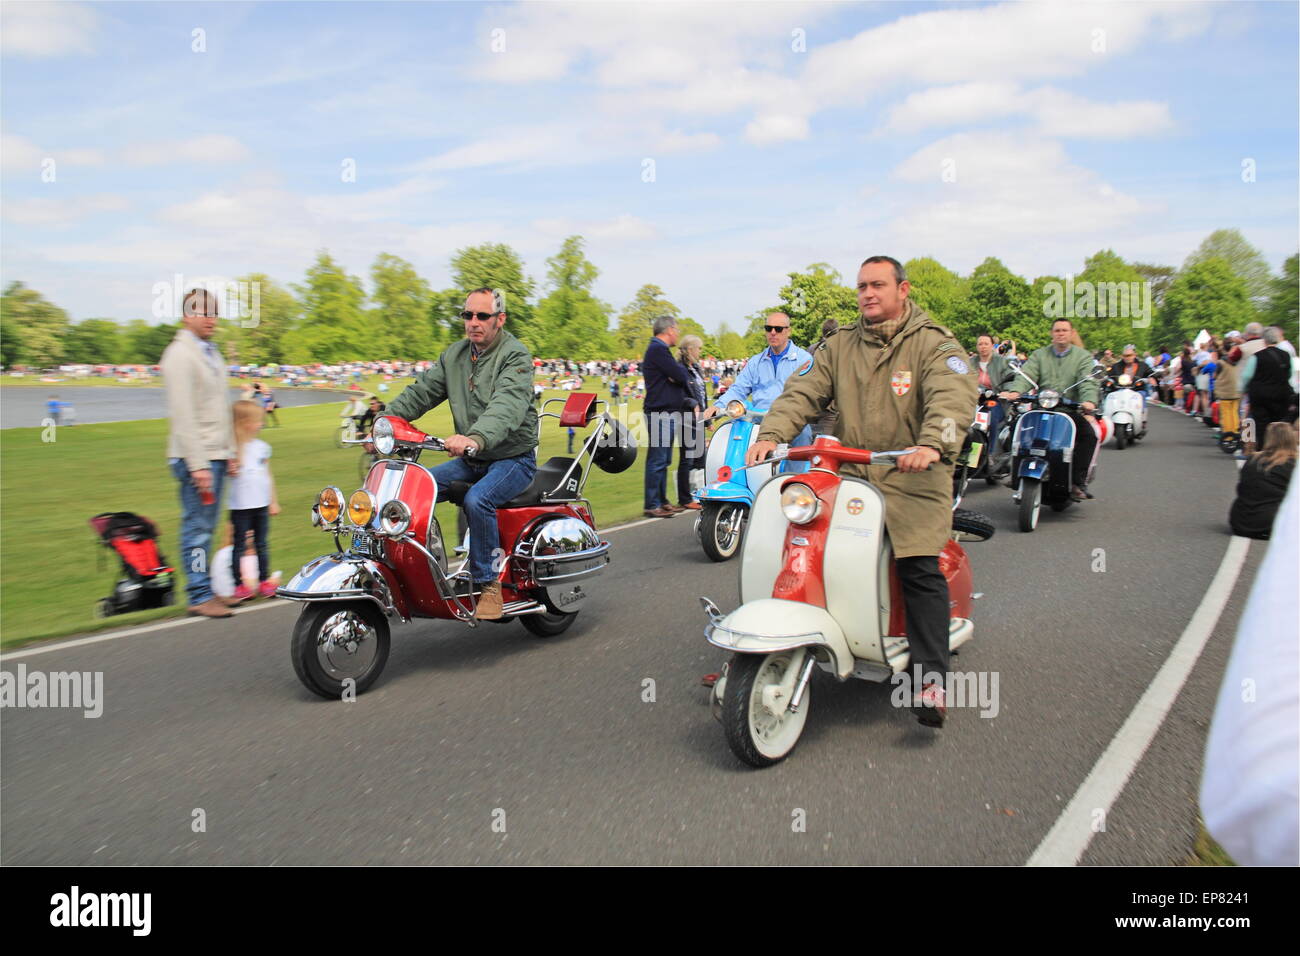 Lambretta scooters Piaggio et Châtaignier, dimanche, Bushy Park, Hampton Court, Angleterre, Grande-Bretagne, Royaume-Uni, UK, Europe. Banque D'Images